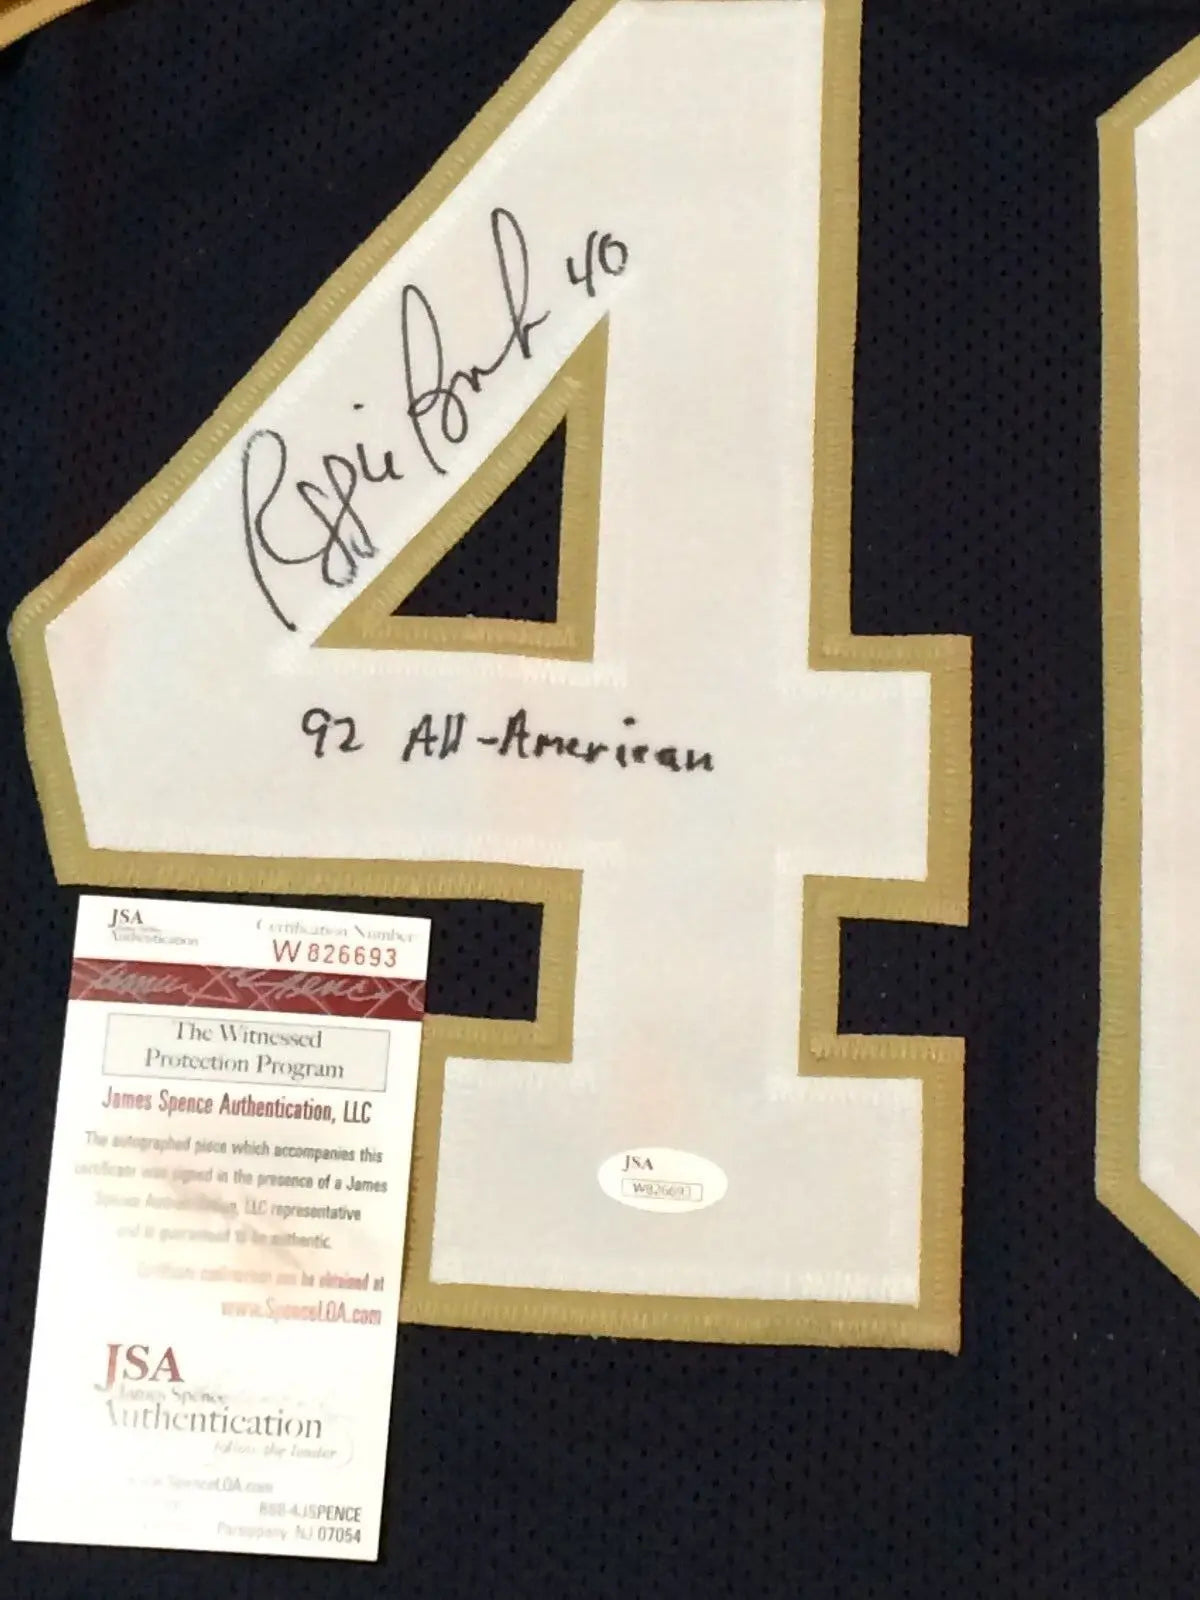 MVP Authentics Reggie Brooks Autographed Signed Incscribed Notre Dame Jersey Jsa Coa 99 sports jersey framing , jersey framing